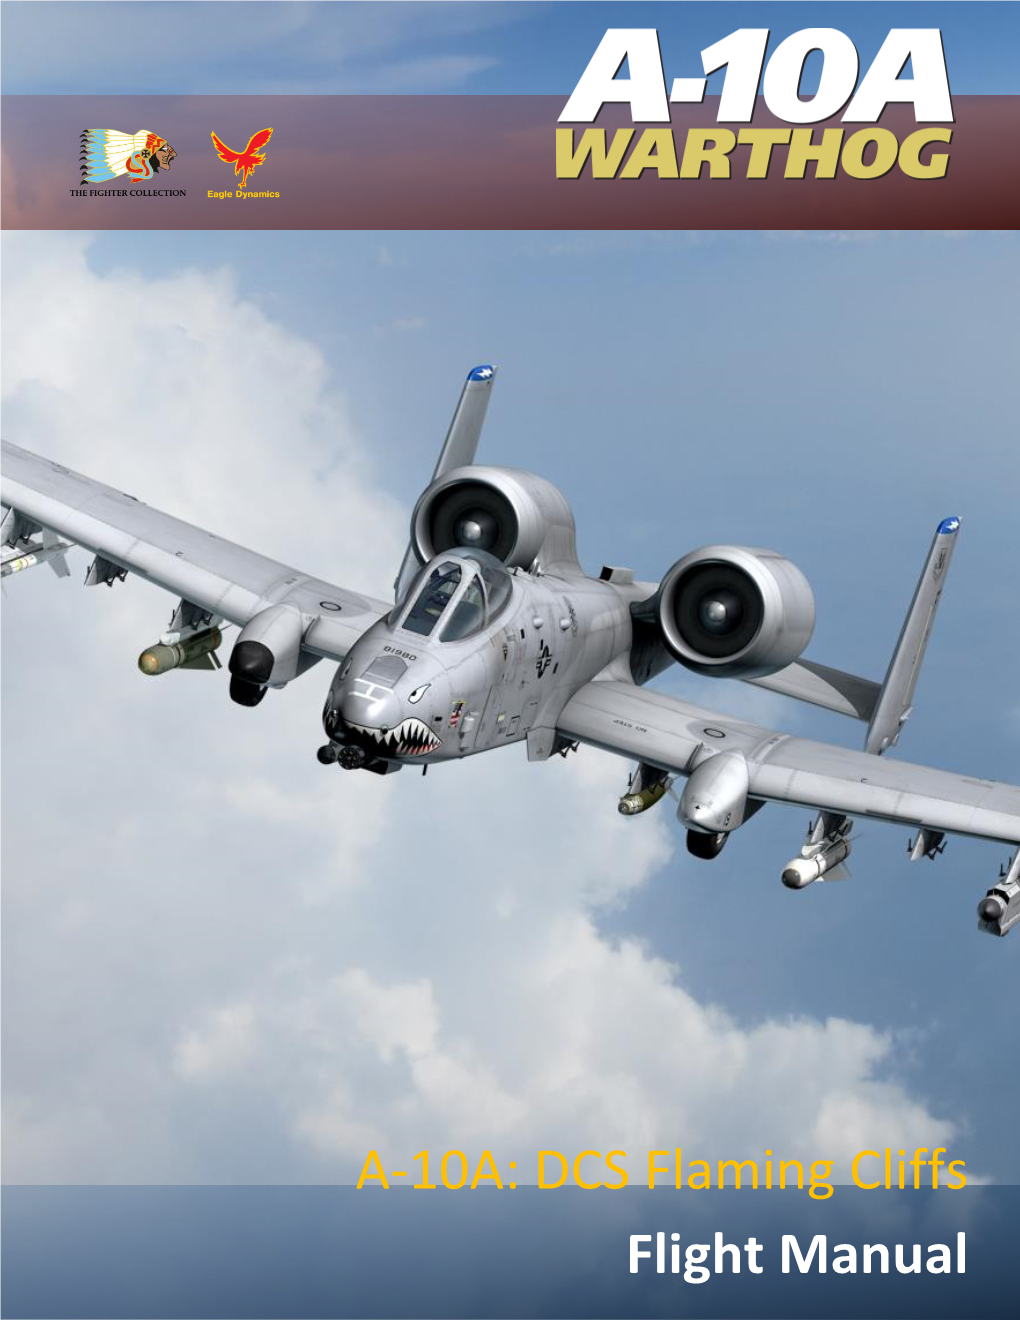 A-10A: DCS Flaming Cliffs Flight Manual DCS WORLD [A-10A: DCS FLAMING CLIFFS]